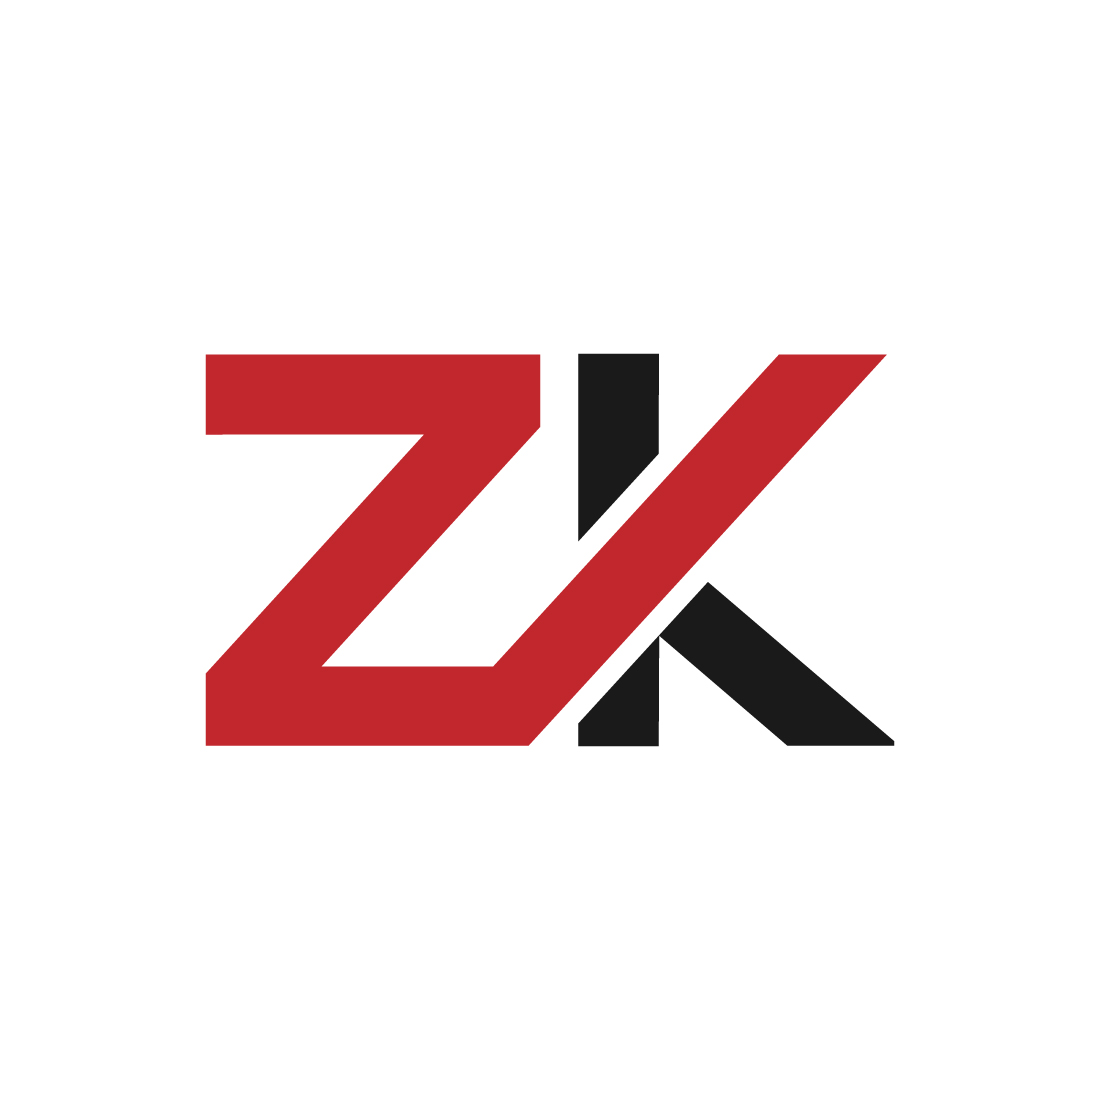 ZK logo design preview image.